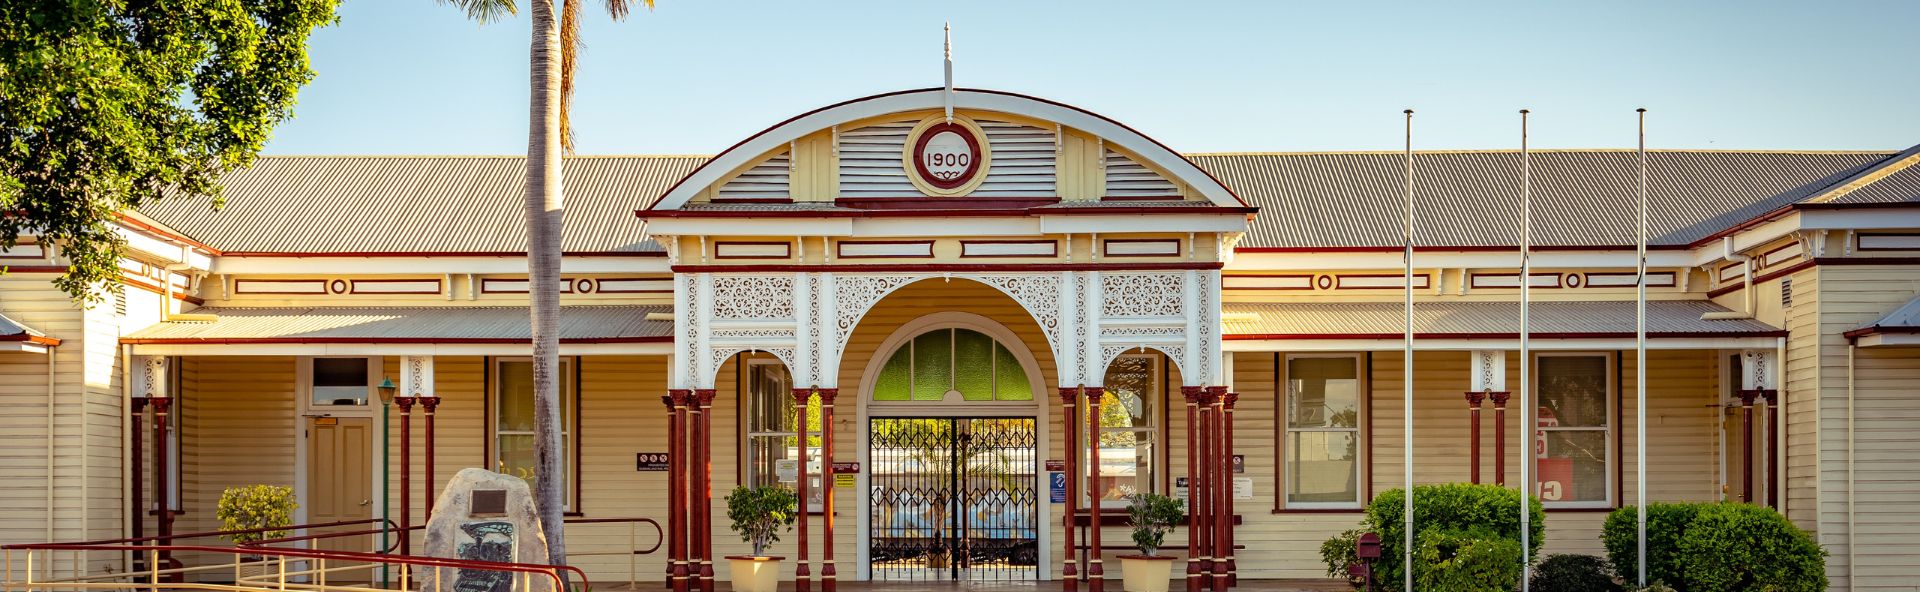 Emerald's historic railway station